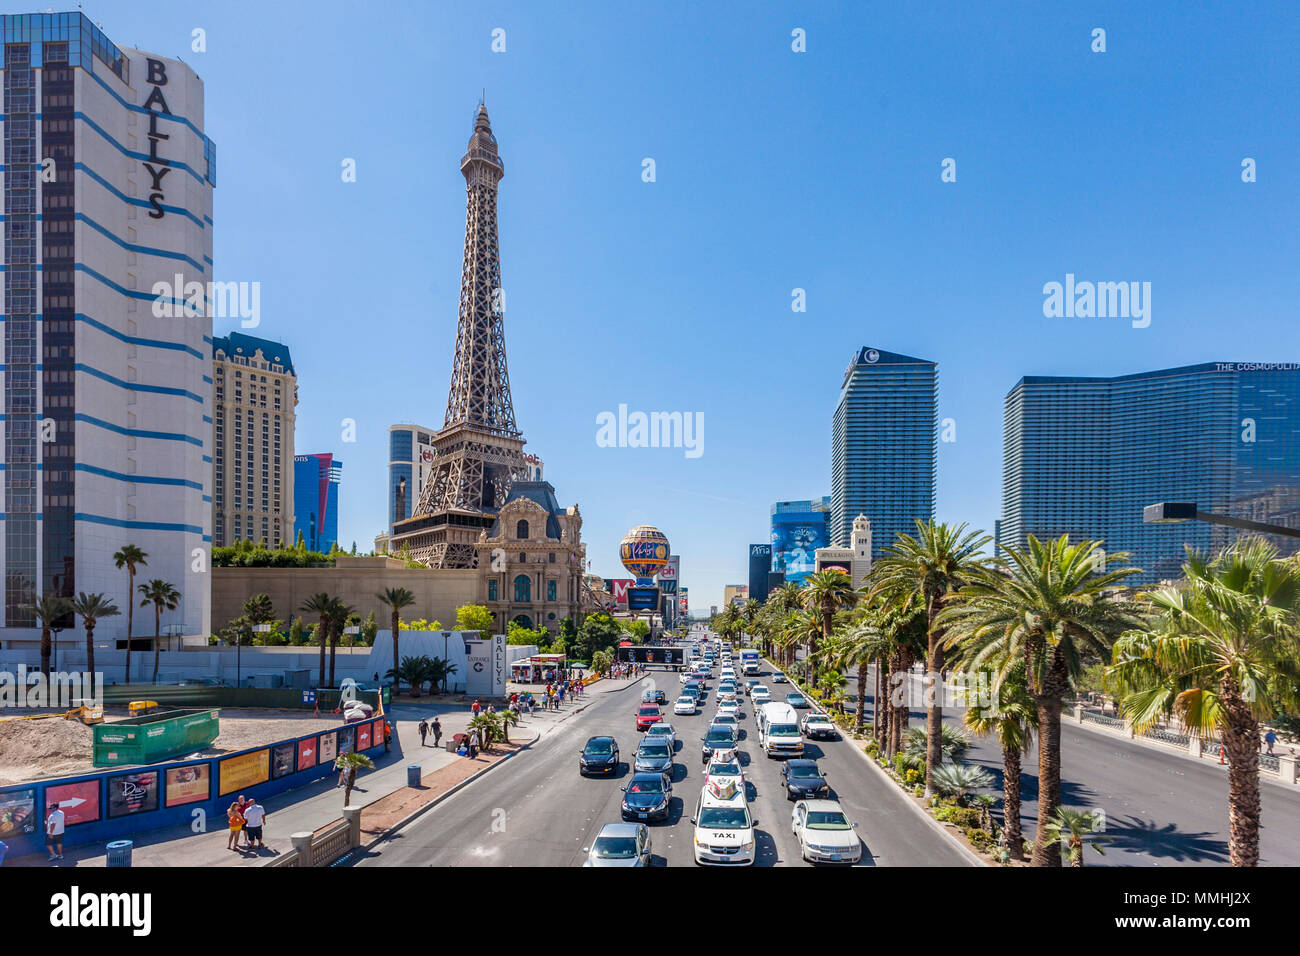 View of the Paris Las Vegas Hotel and Casino, LAS VEGAS, USA Editorial  Image - Image of awesome, boulevard: 64939315